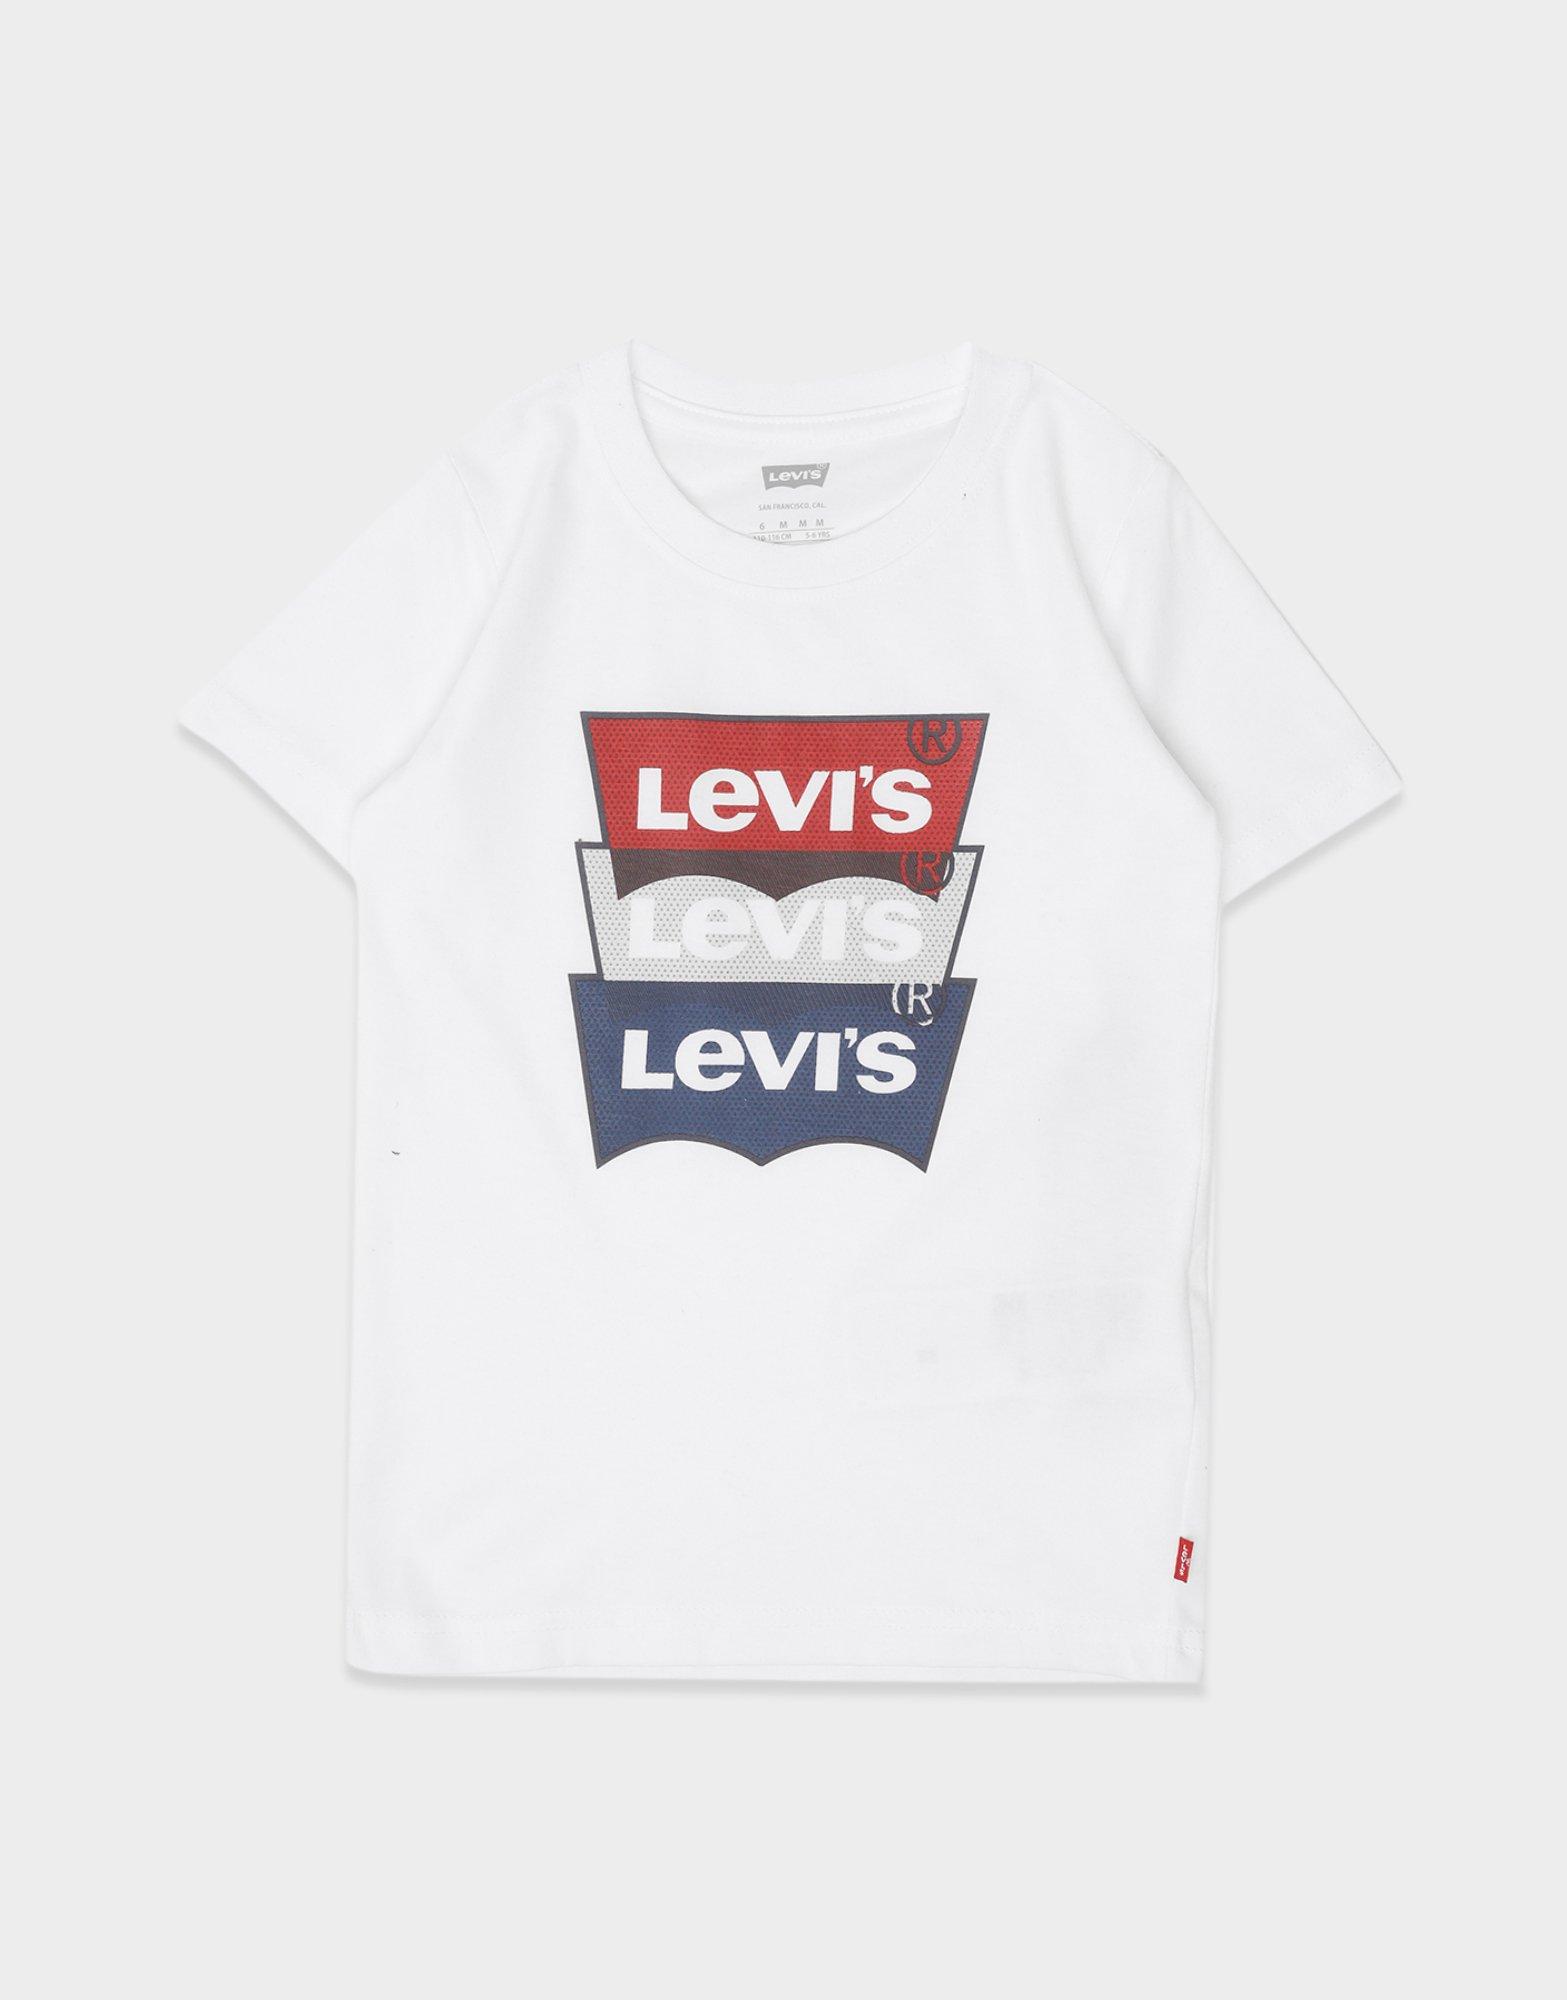 levi's new t shirt